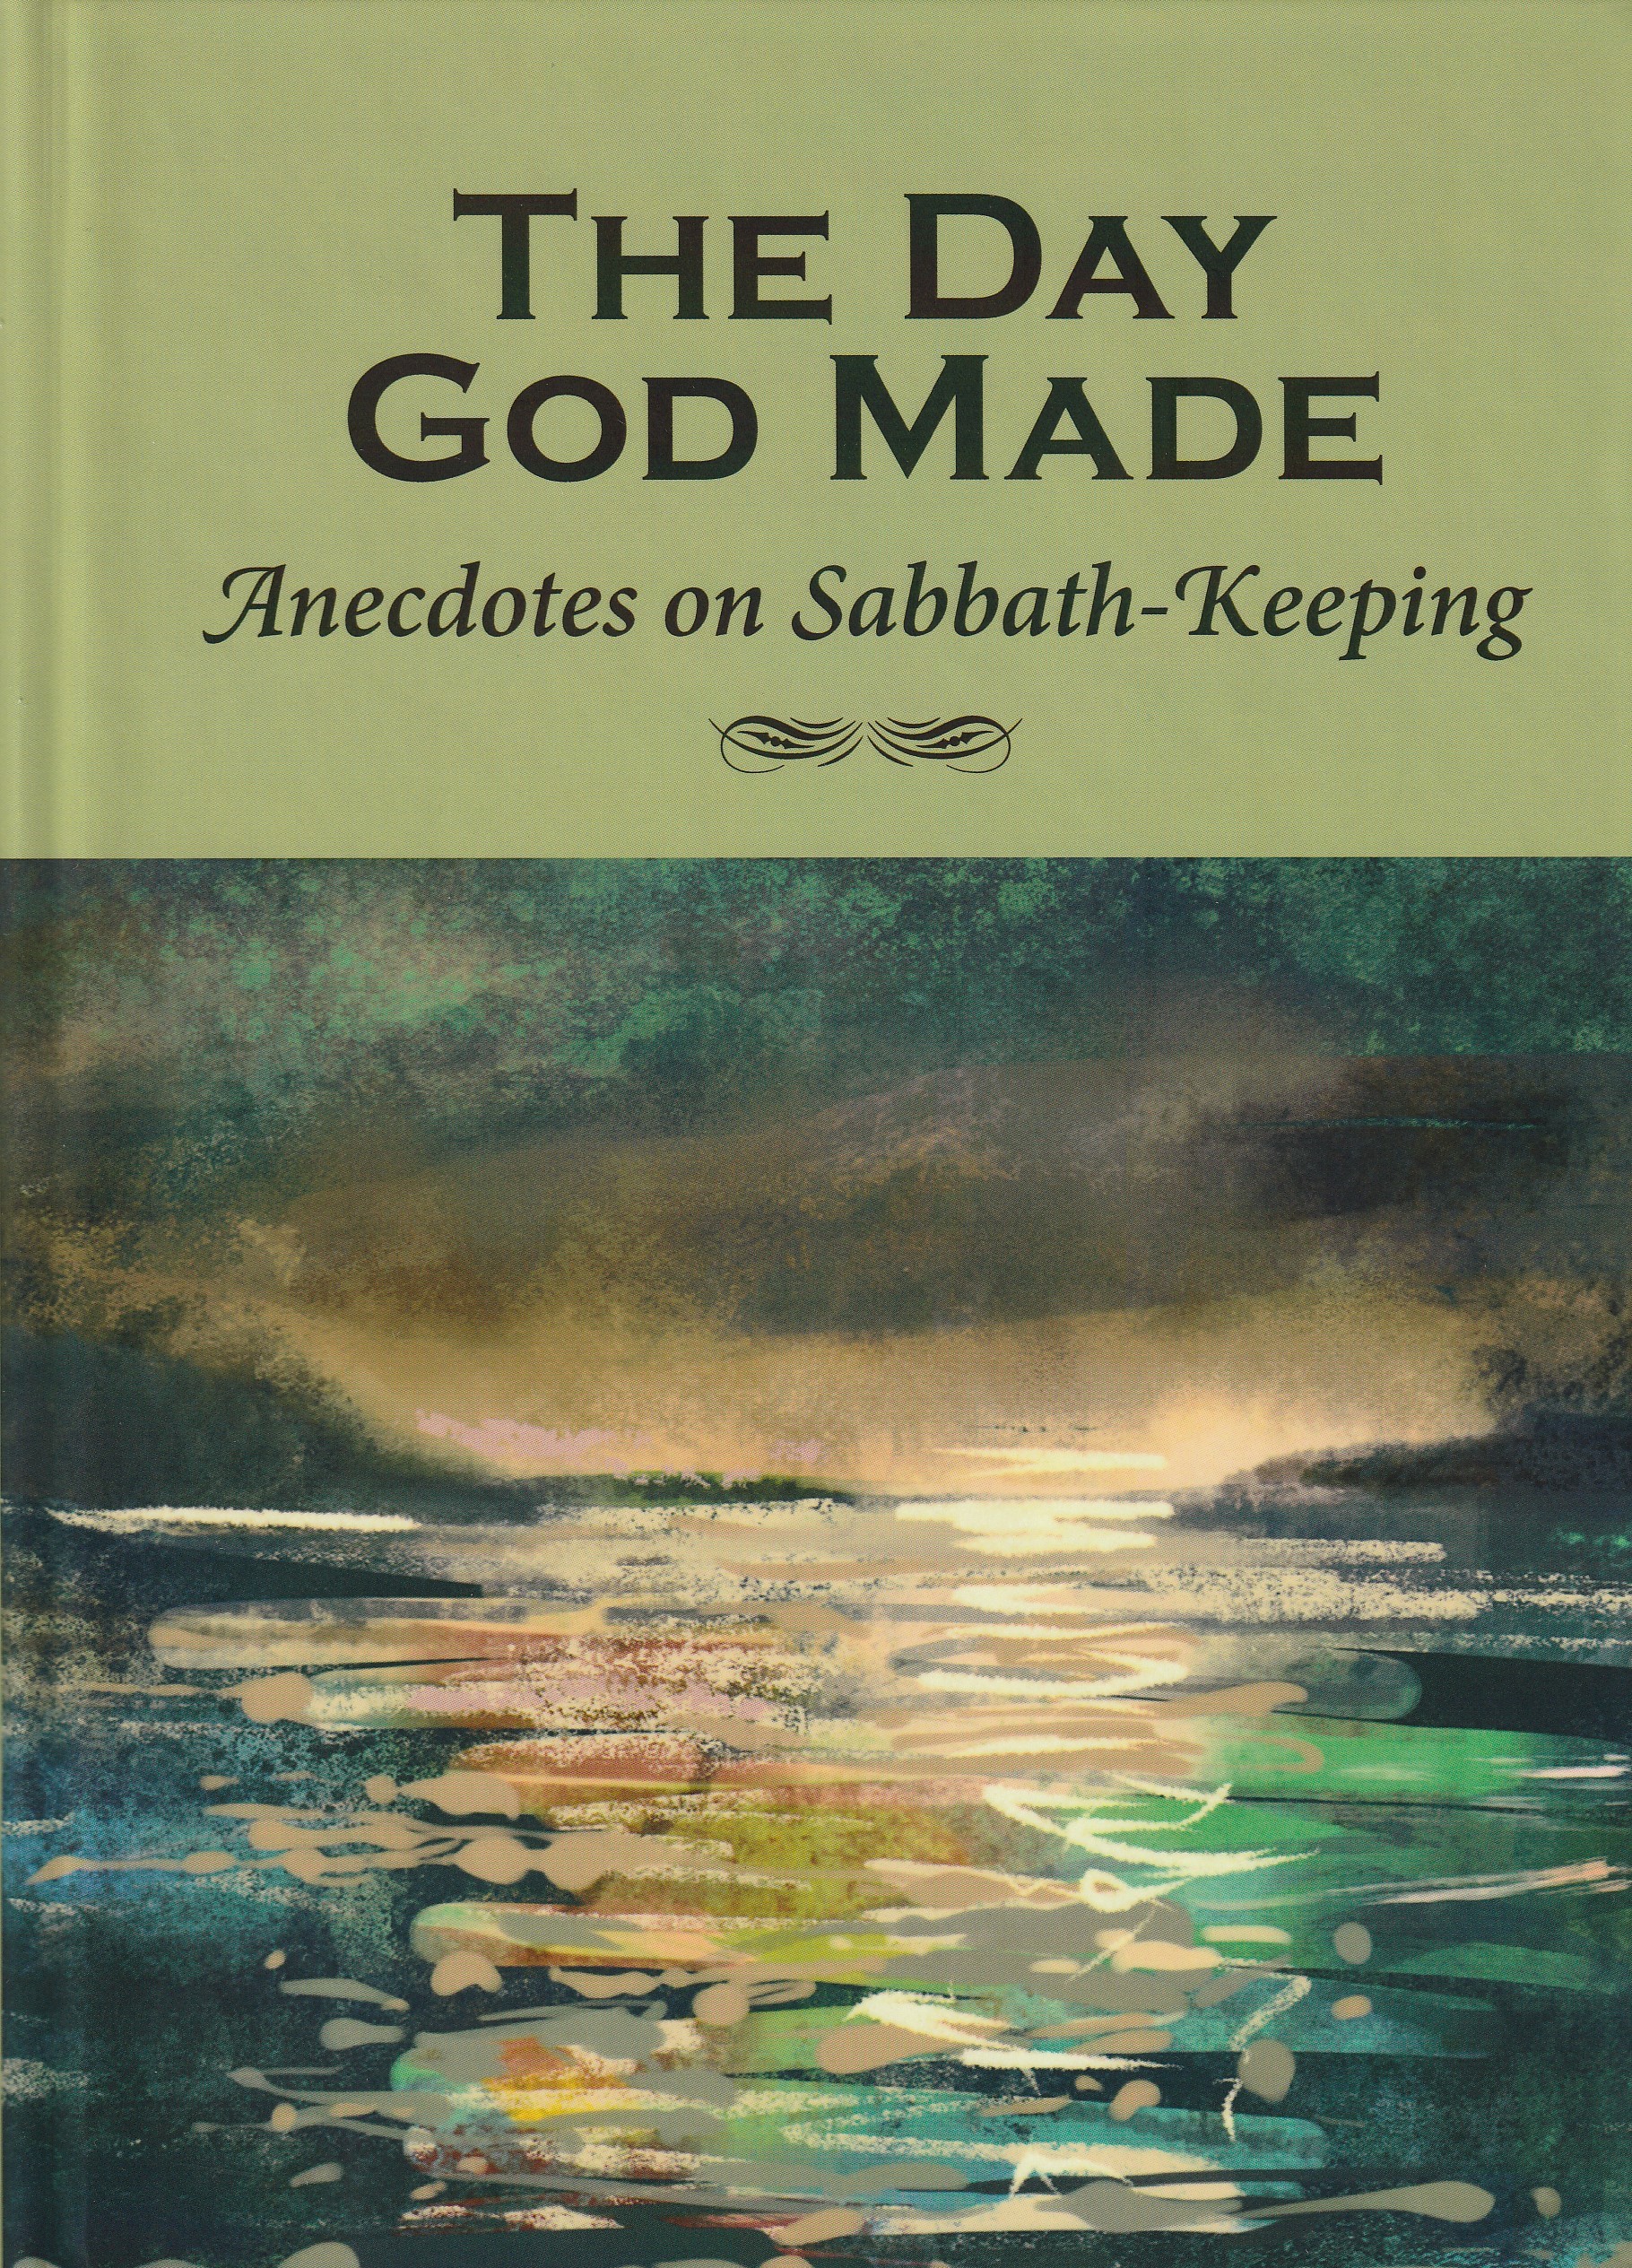 The Day God Made: Anecdotes on Sabbath-Keeping